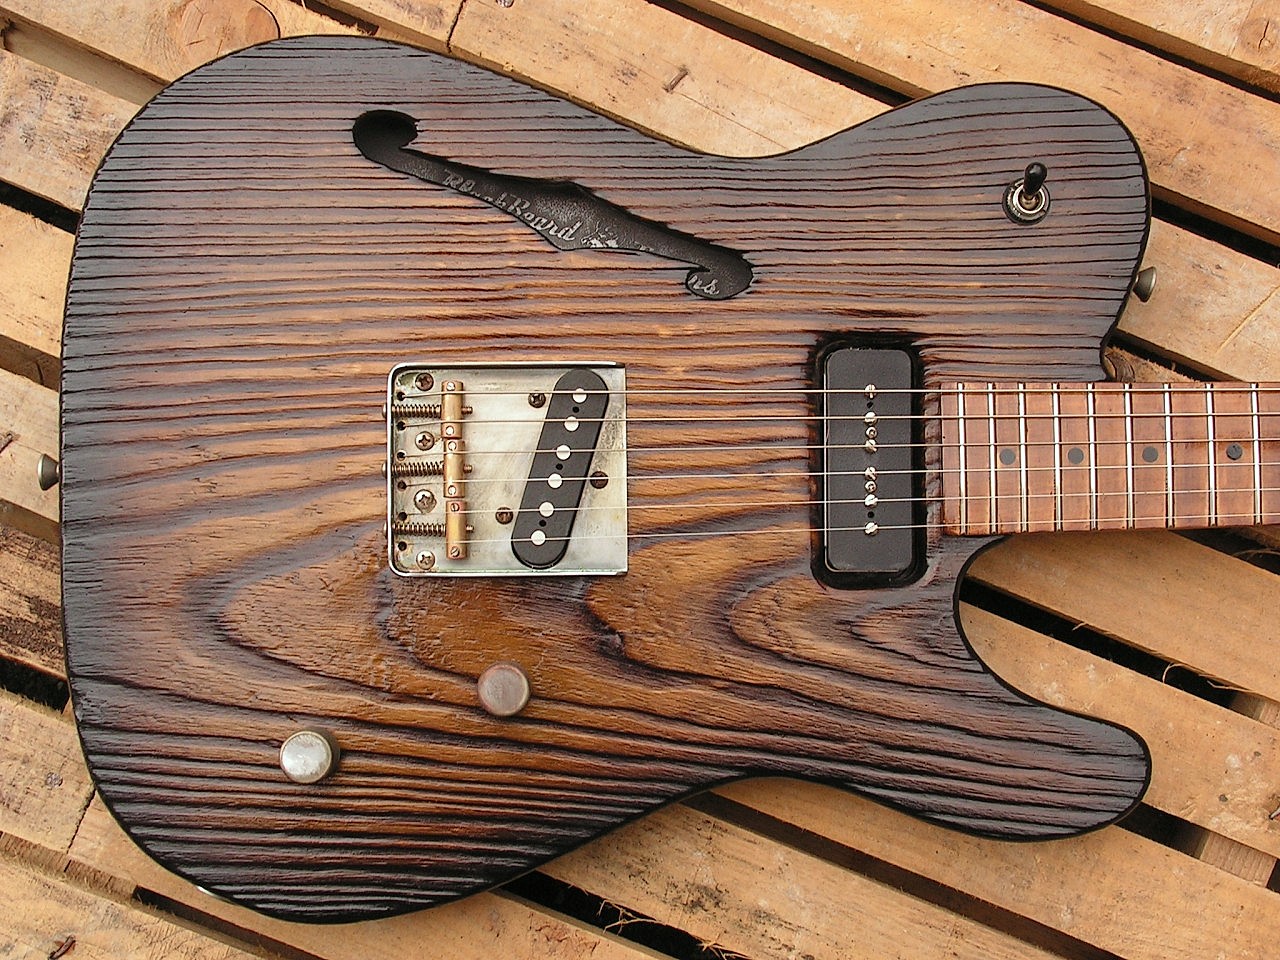 Body di una chitarra Telecaster Thinline in pino roasted